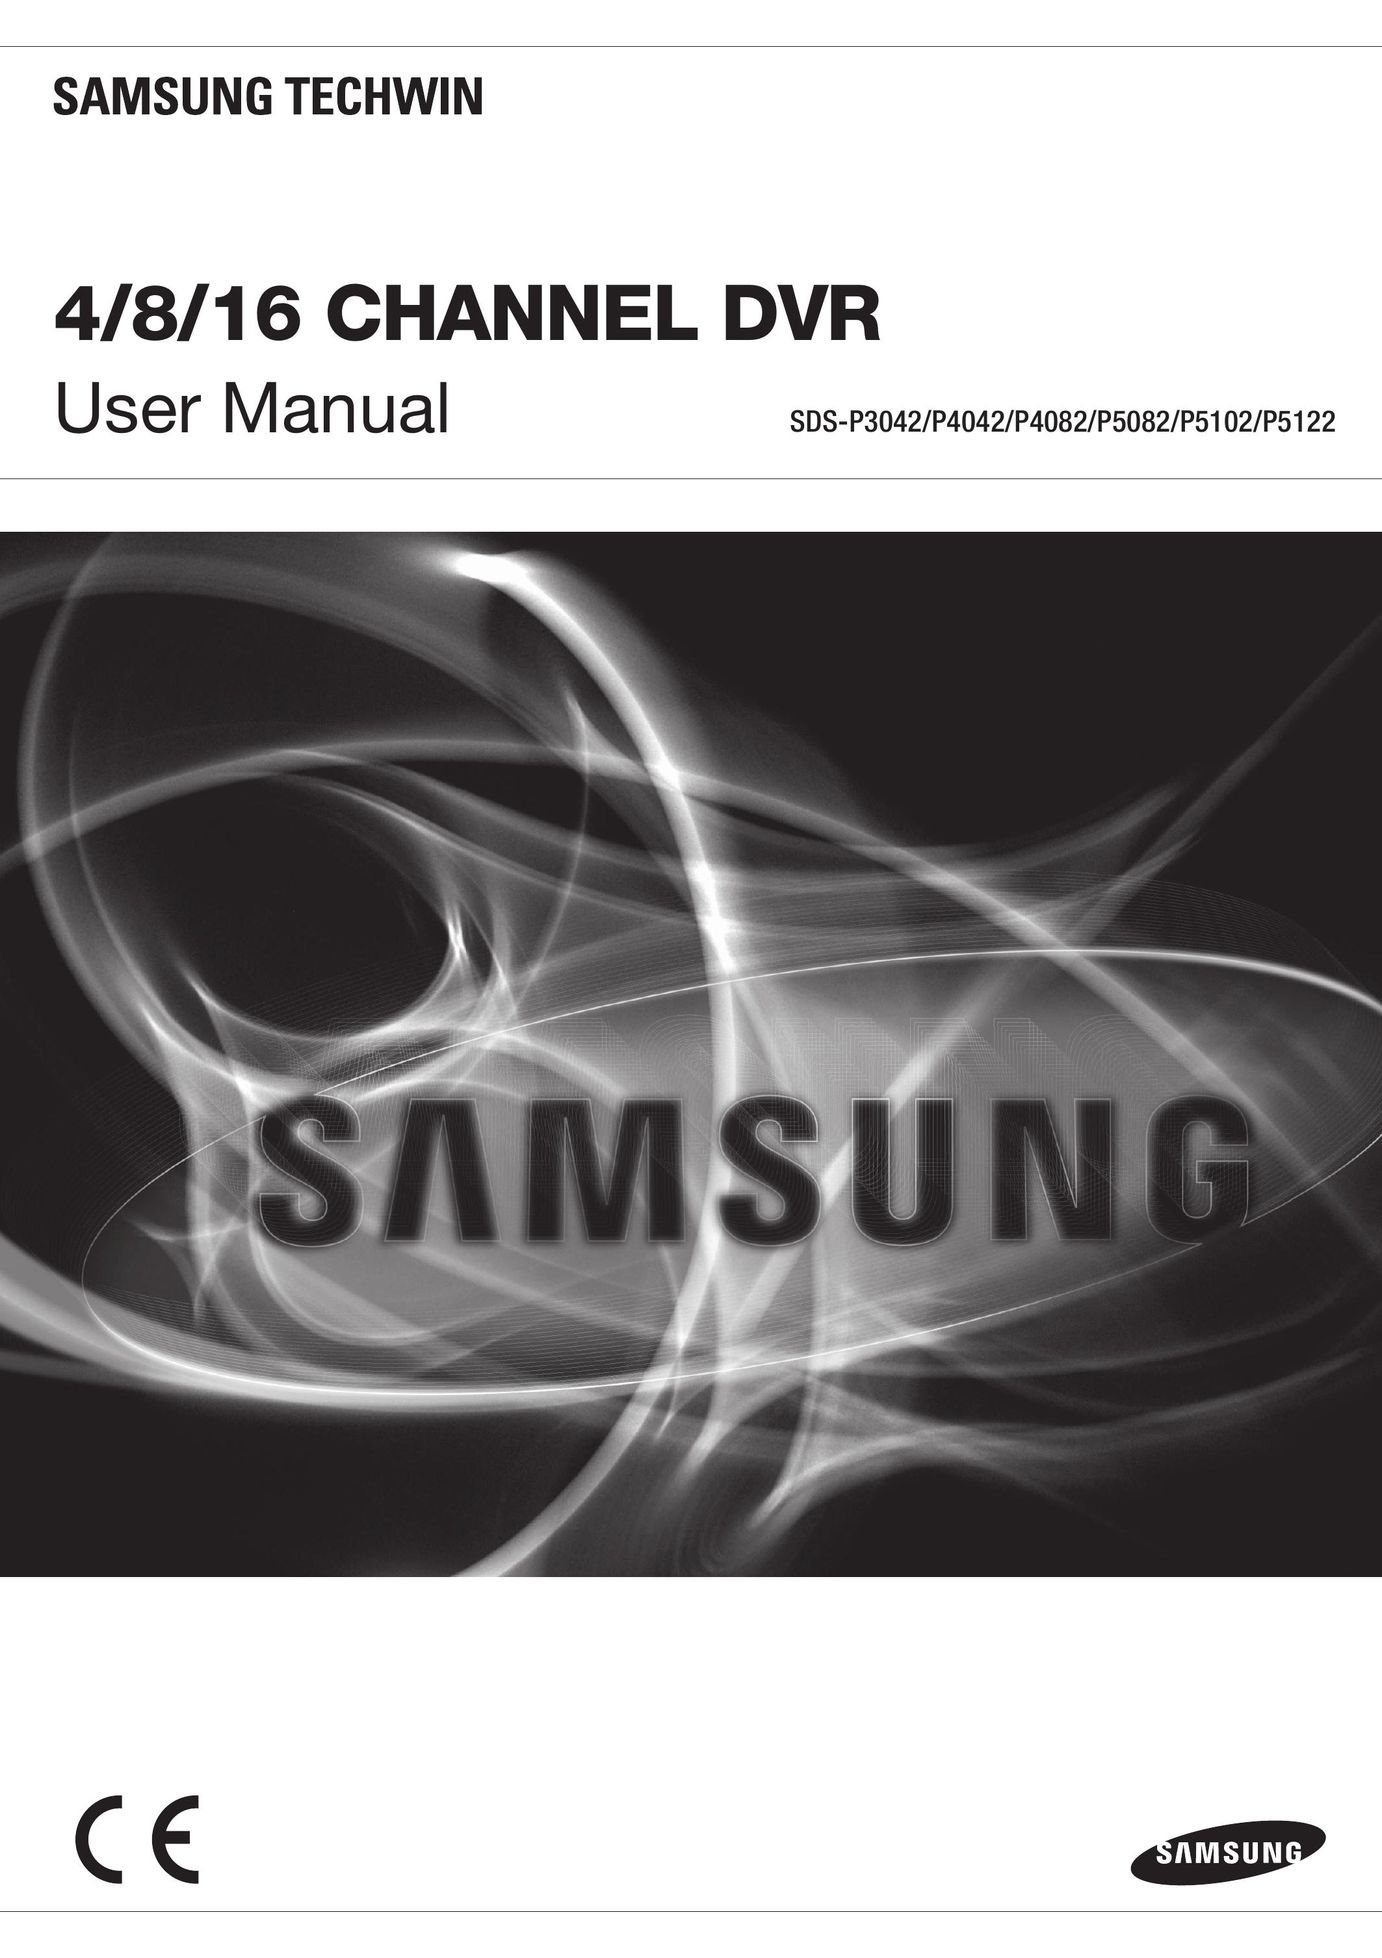 Samsung SDS-P4042 DVR User Manual